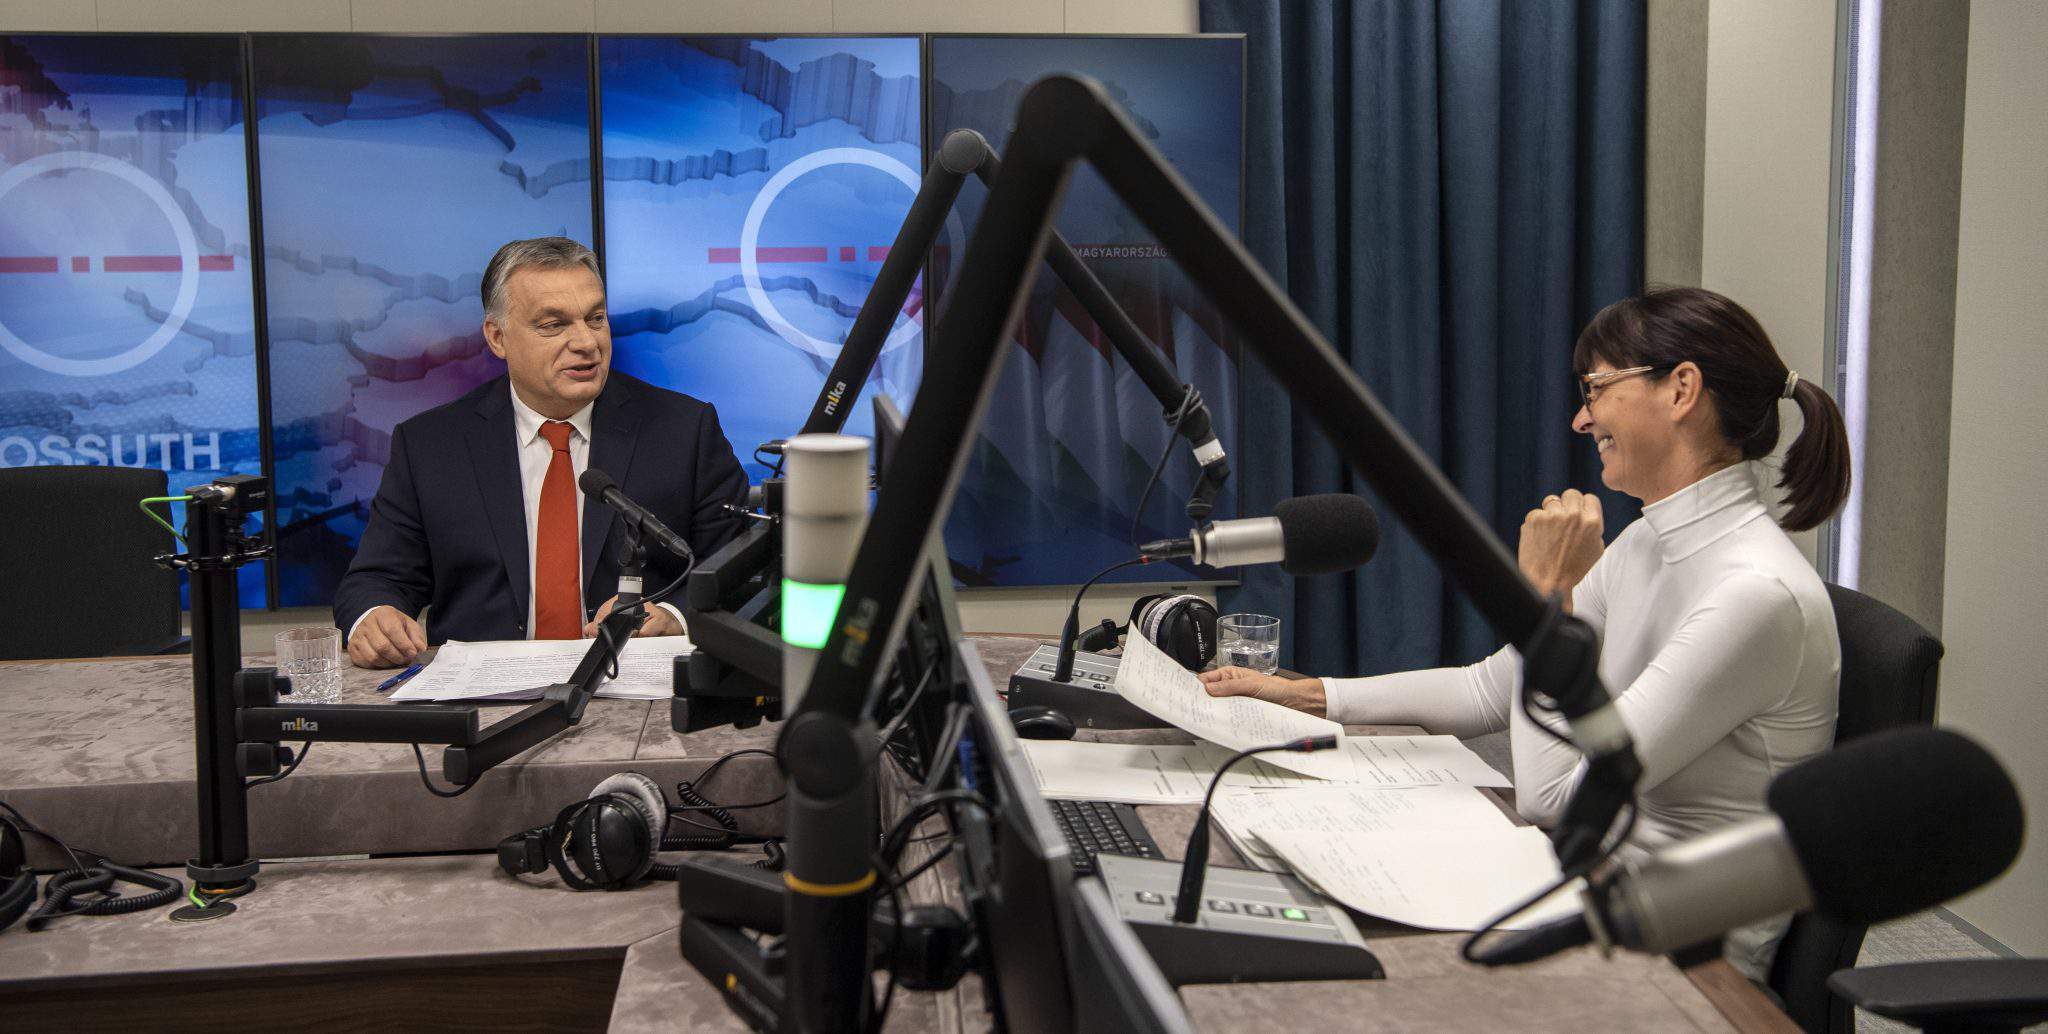 Orbánov radio intervju